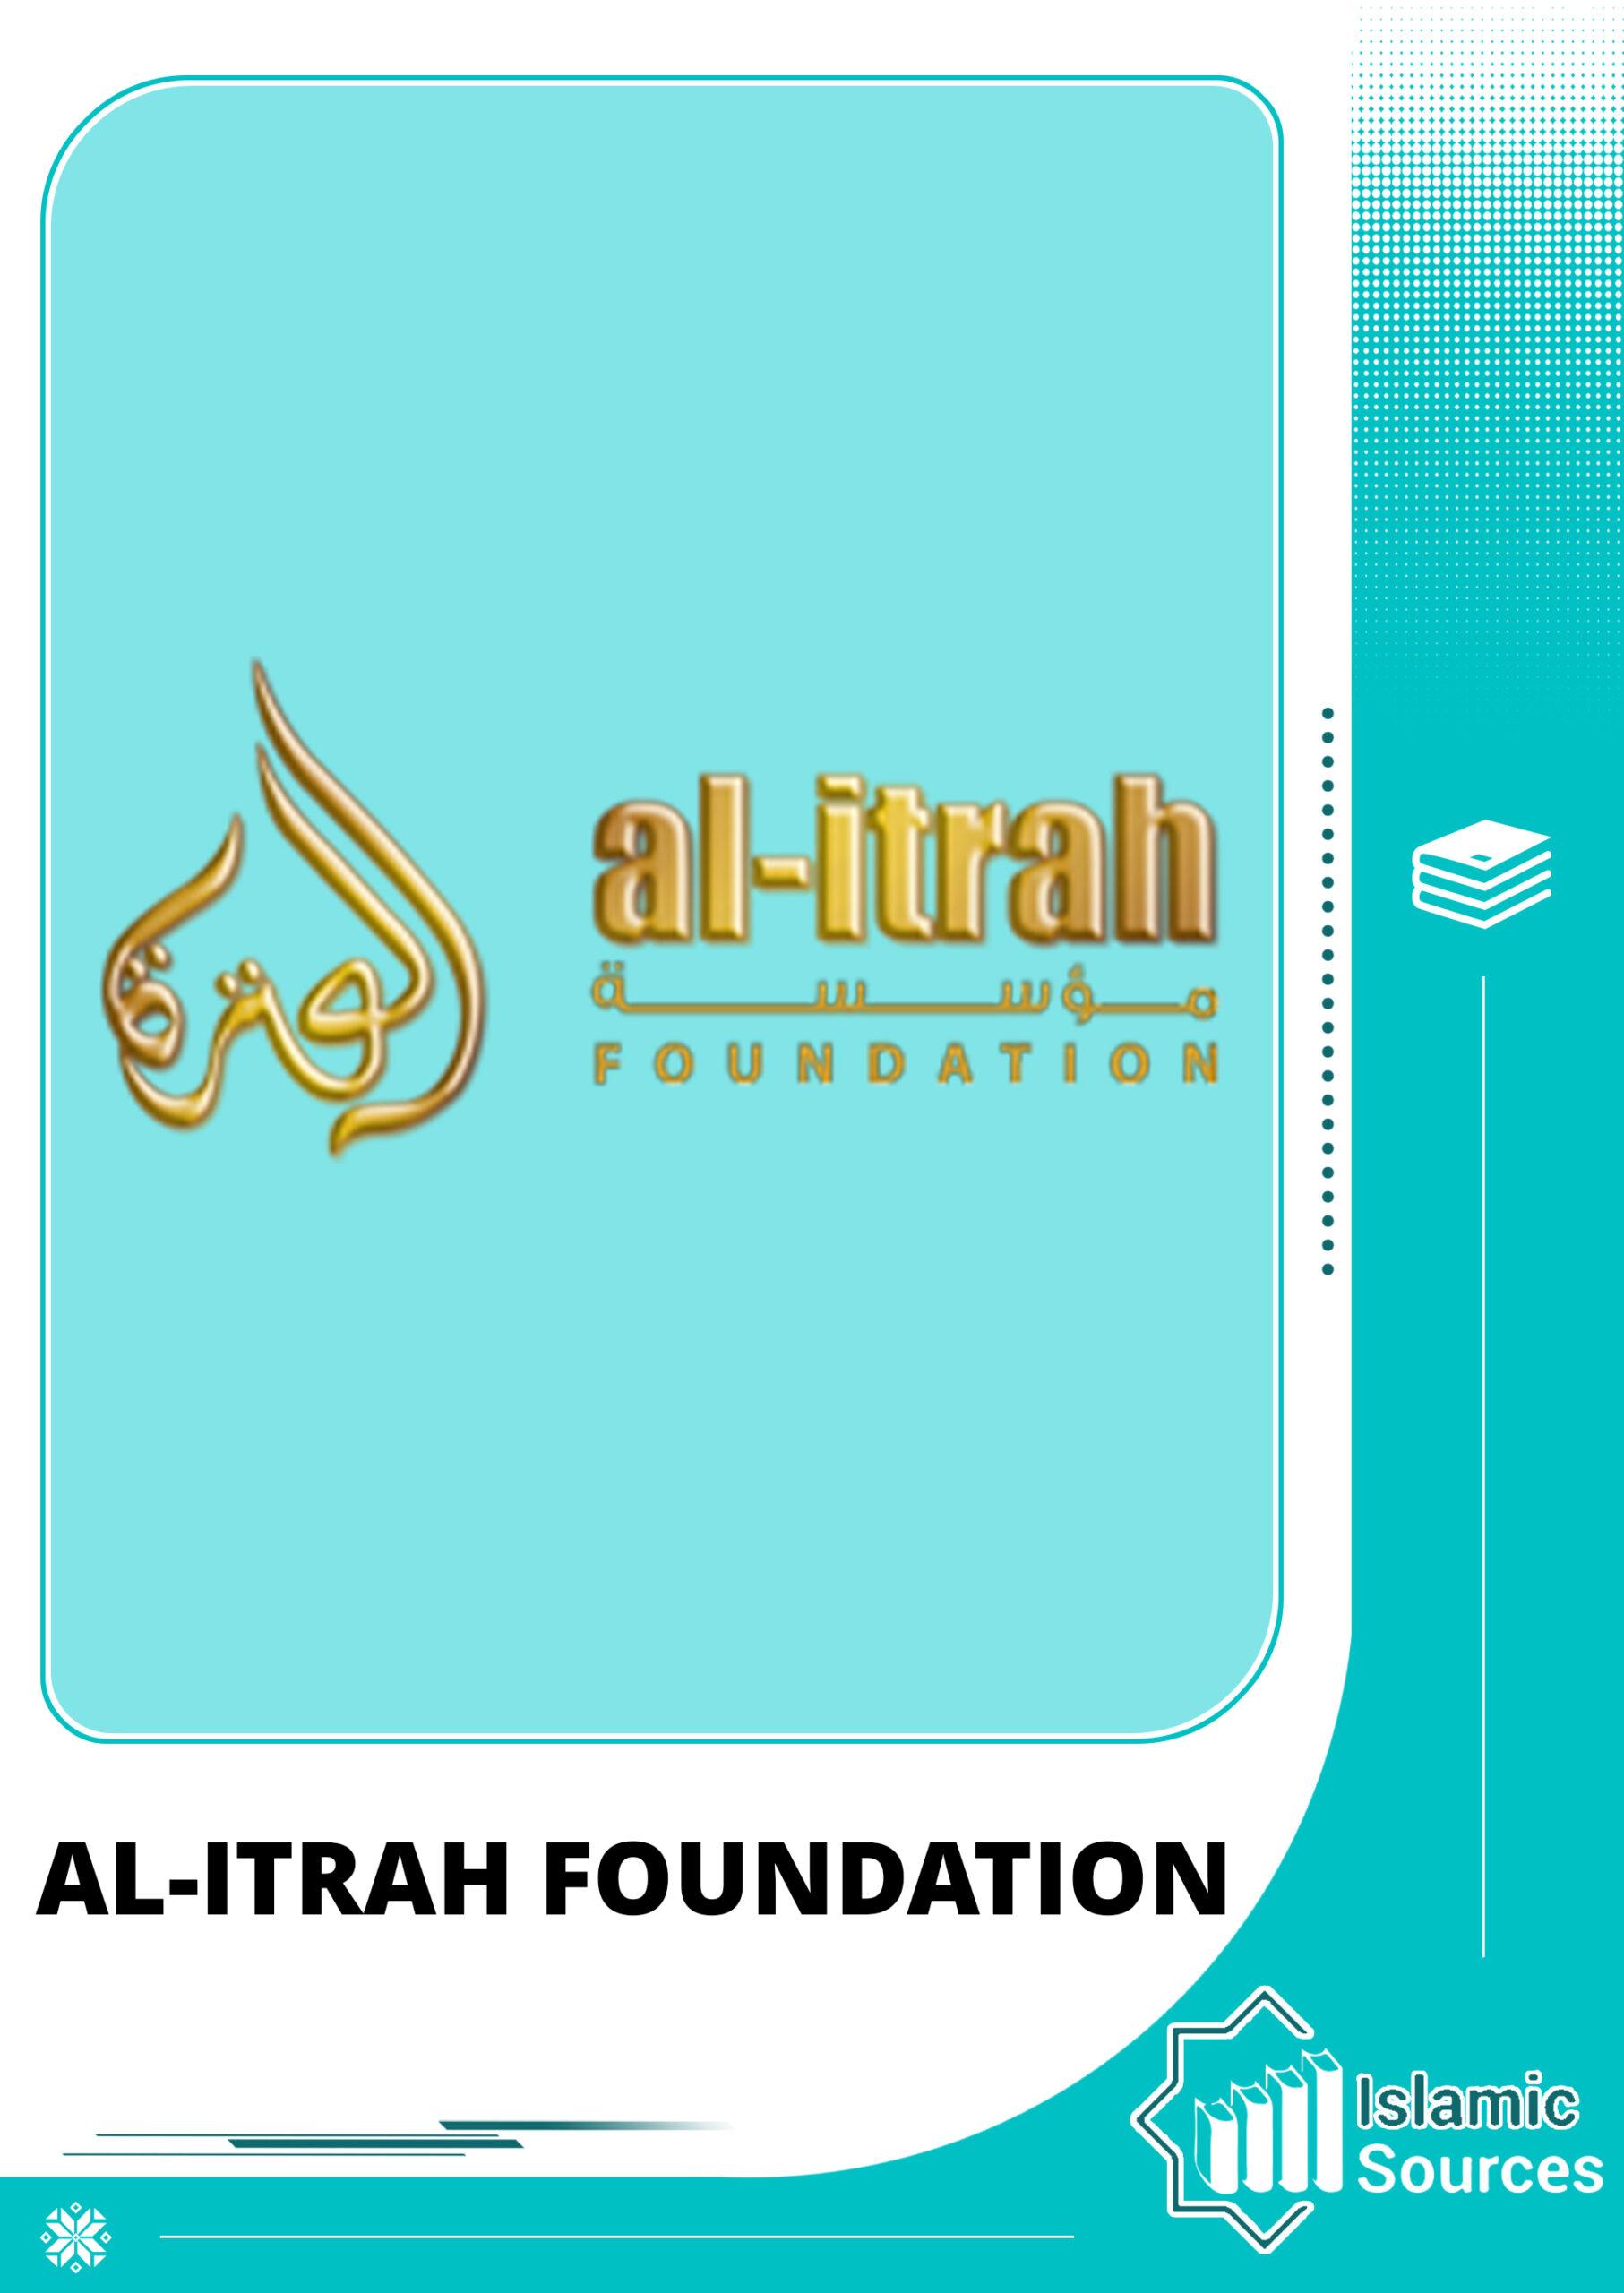 AL-ITRAH FOUNDATION